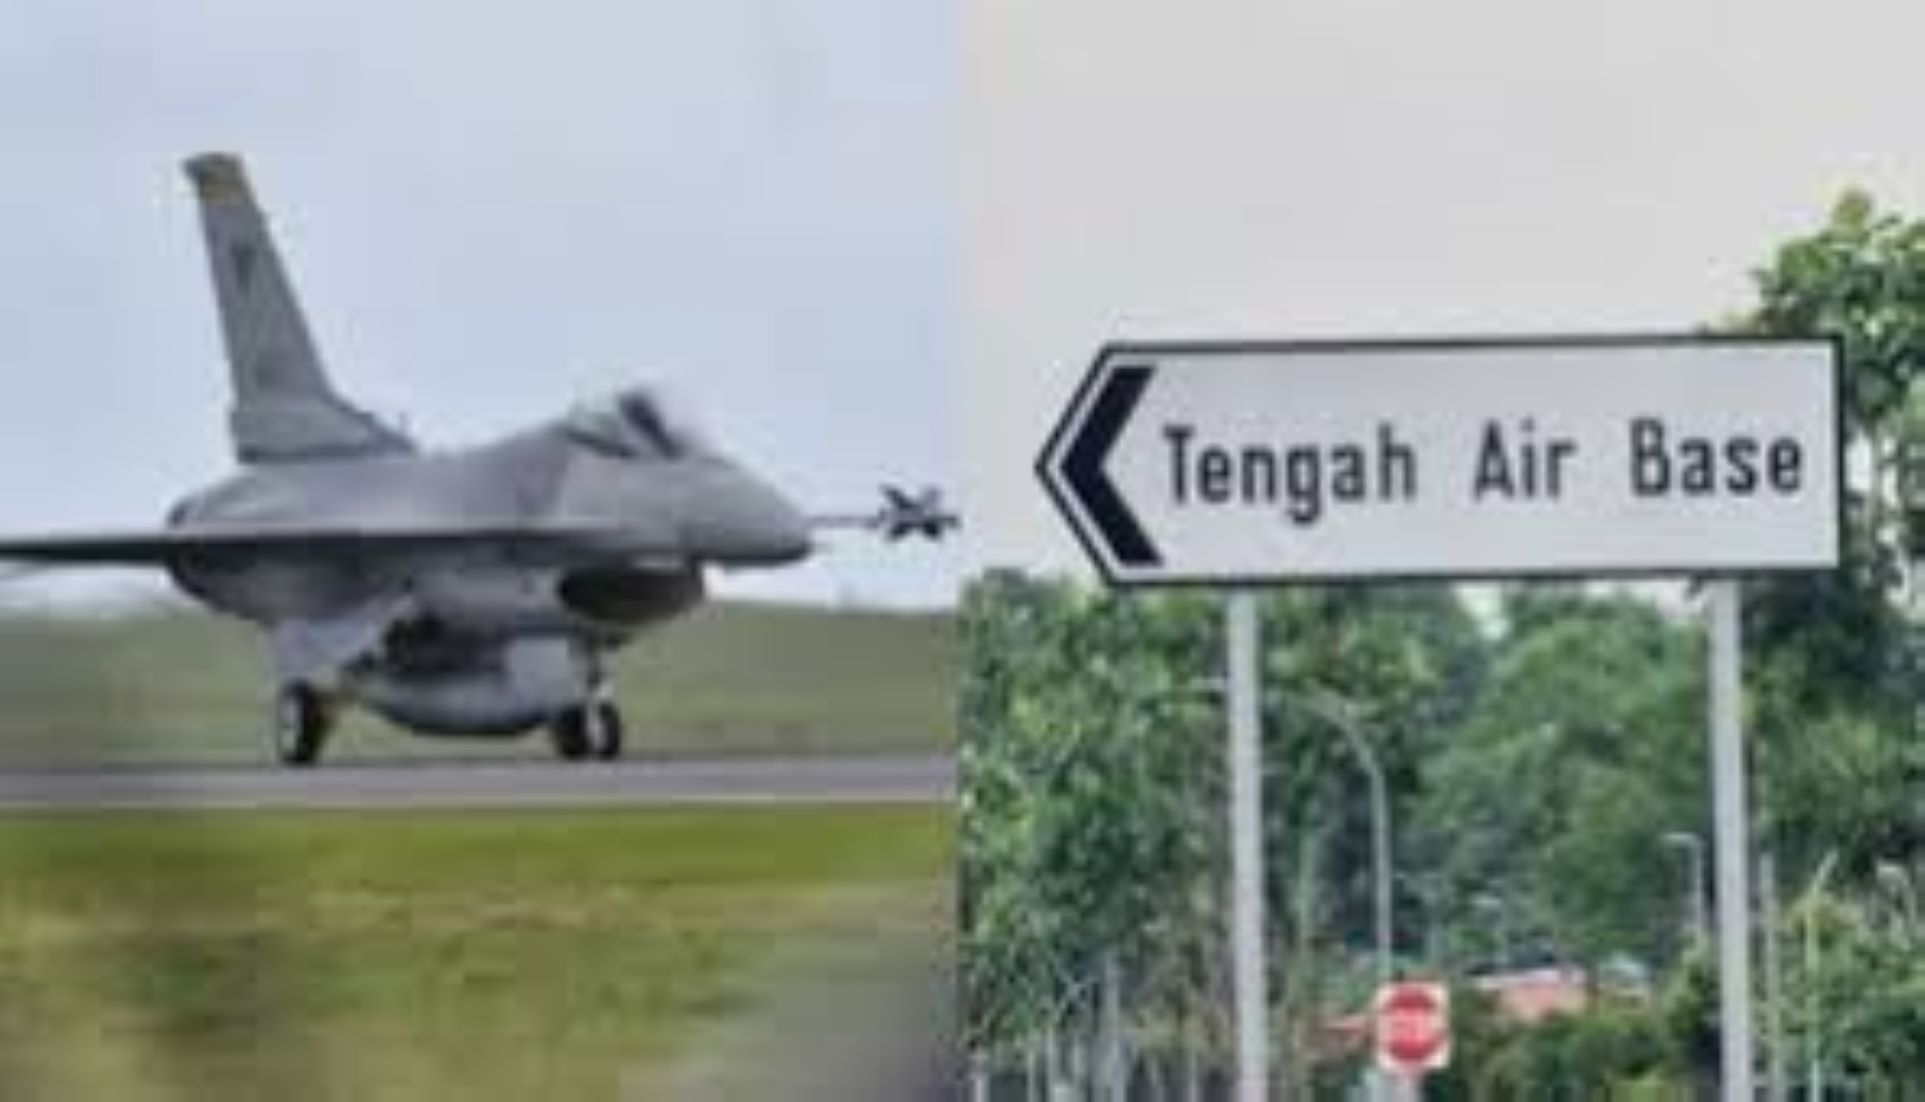 Singapore To Take Additional Check To Prevent F-16 Crash